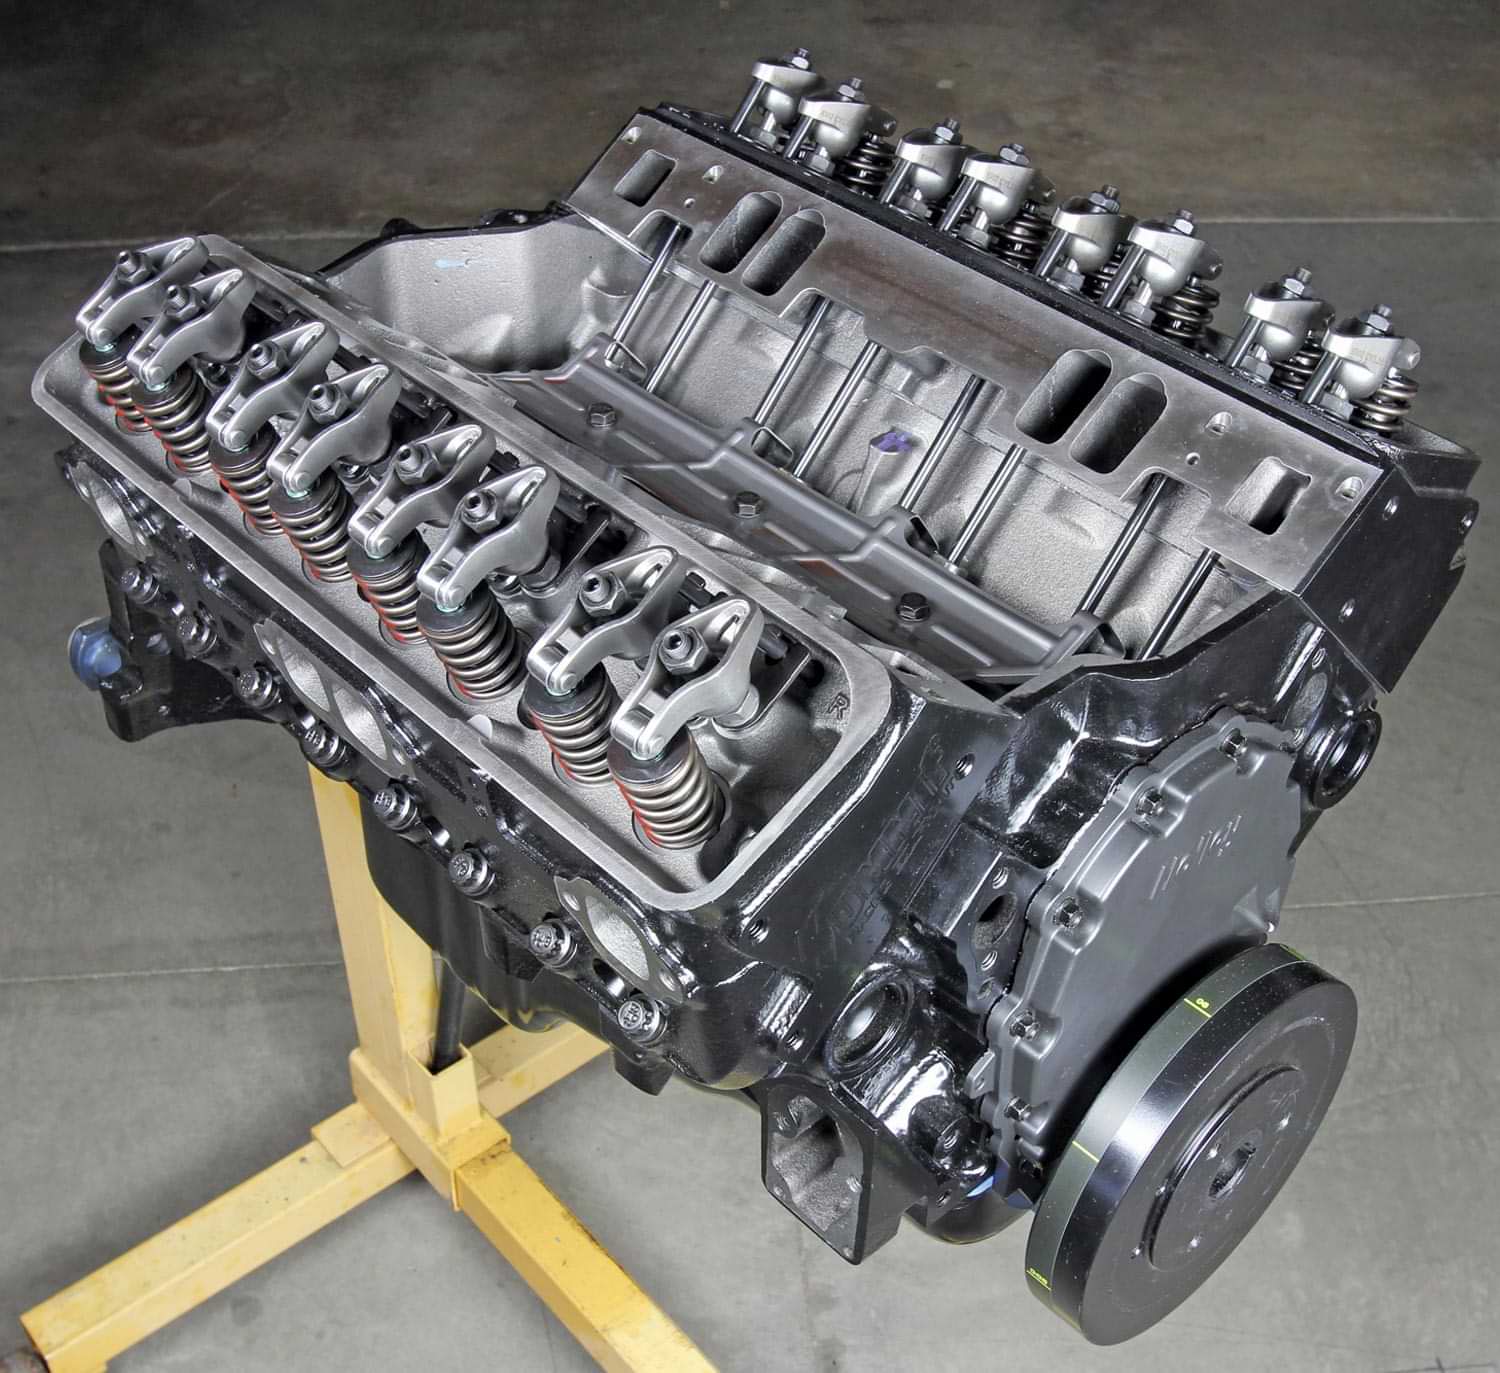 long-block 377ci Chevy engine